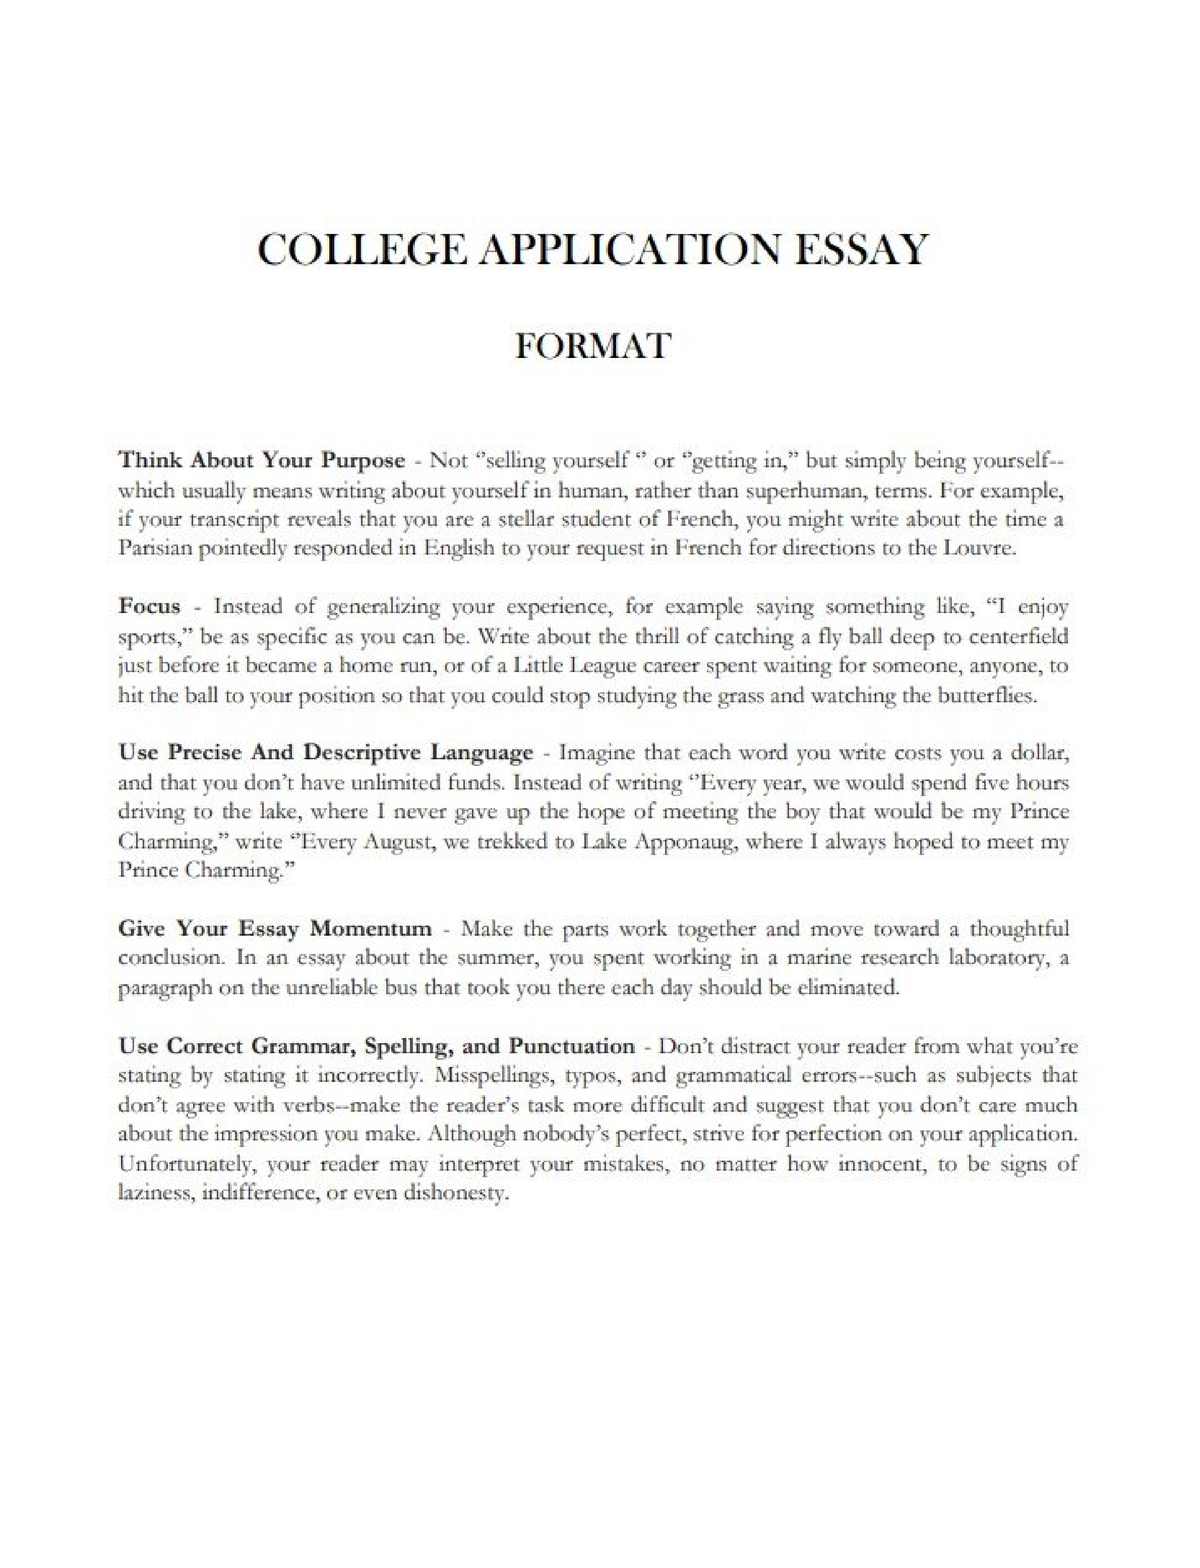 unc college application essay